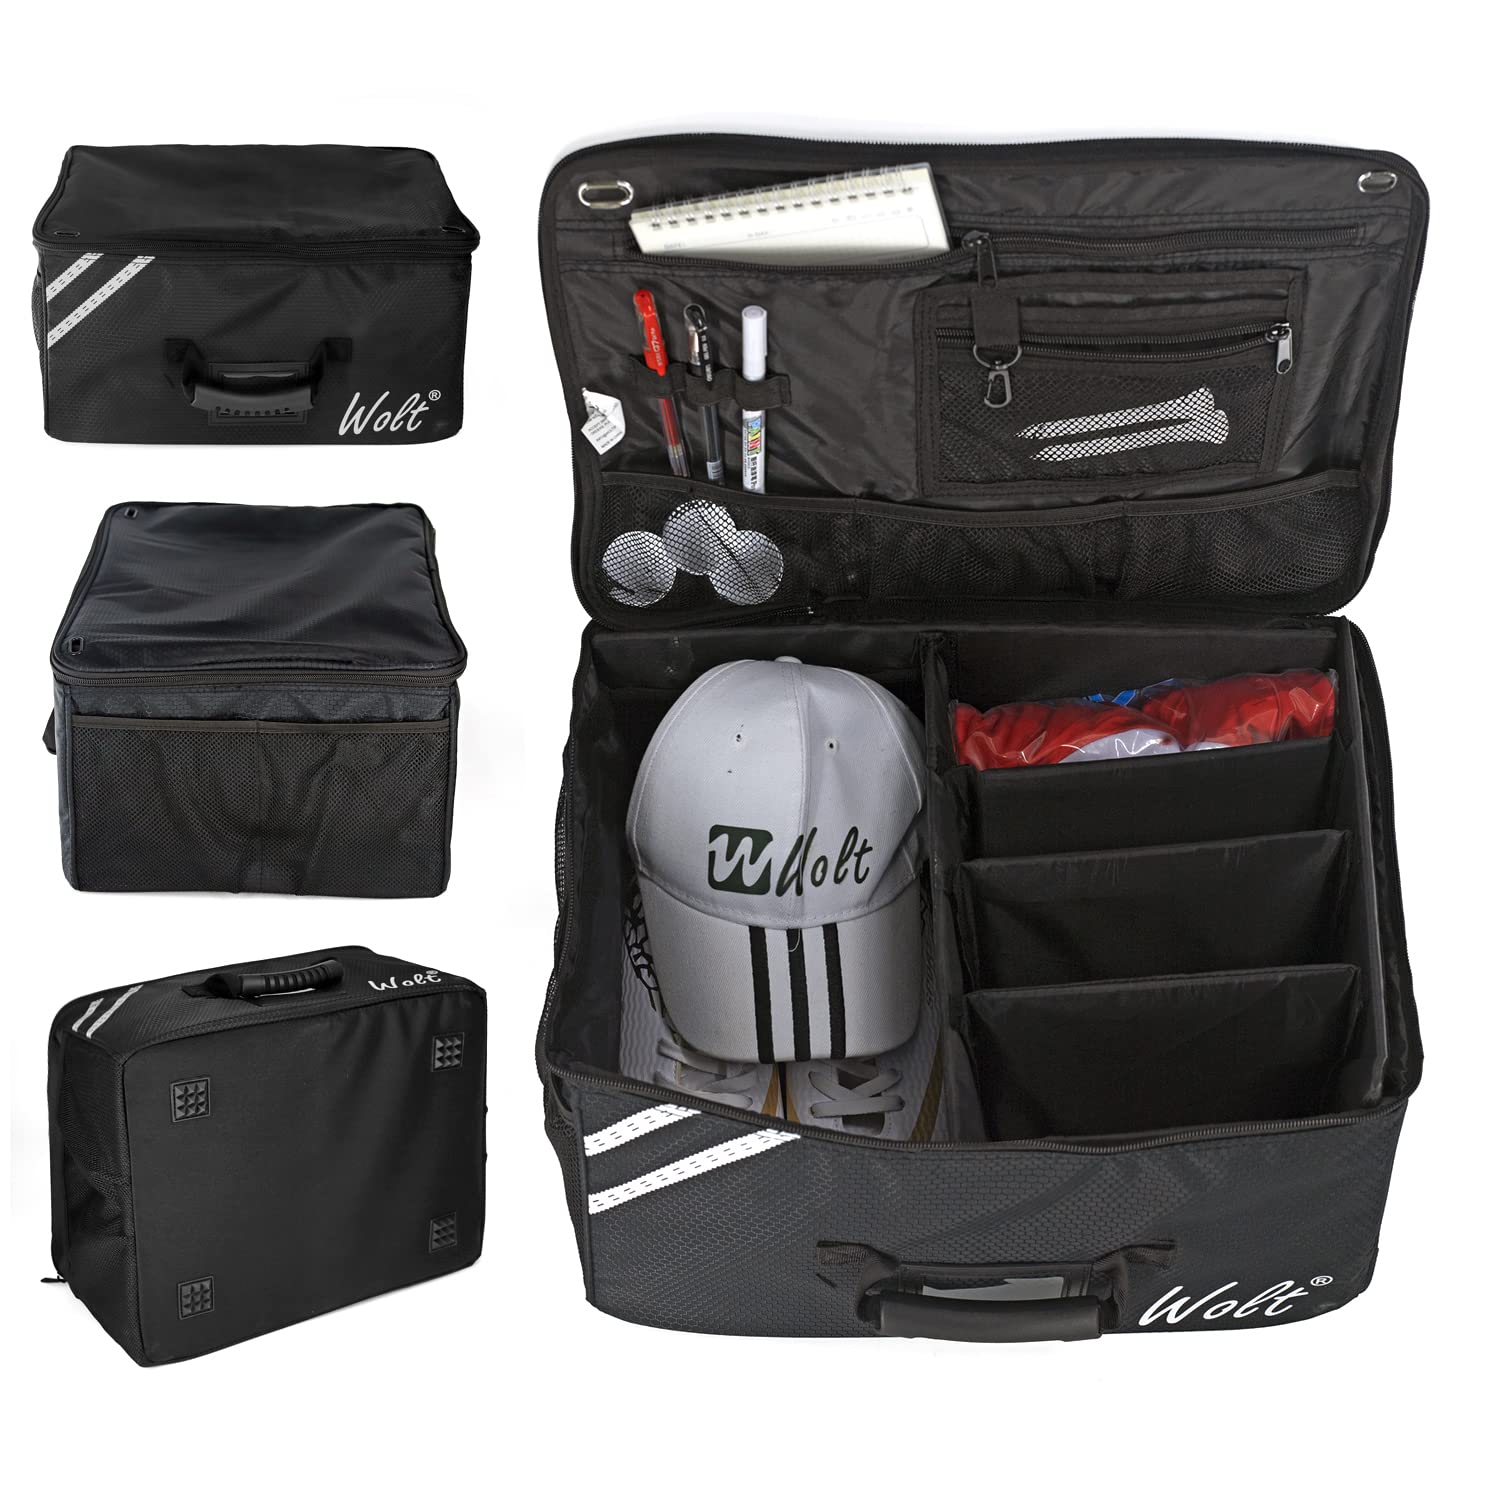 WOLT Golf Trunk Organizer Storage - Waterproof Car Golf Locker for Golf  Accessories, Golf Gloves, Tees, Balls, Collapsible & Adjustable Clapboard  Design Black